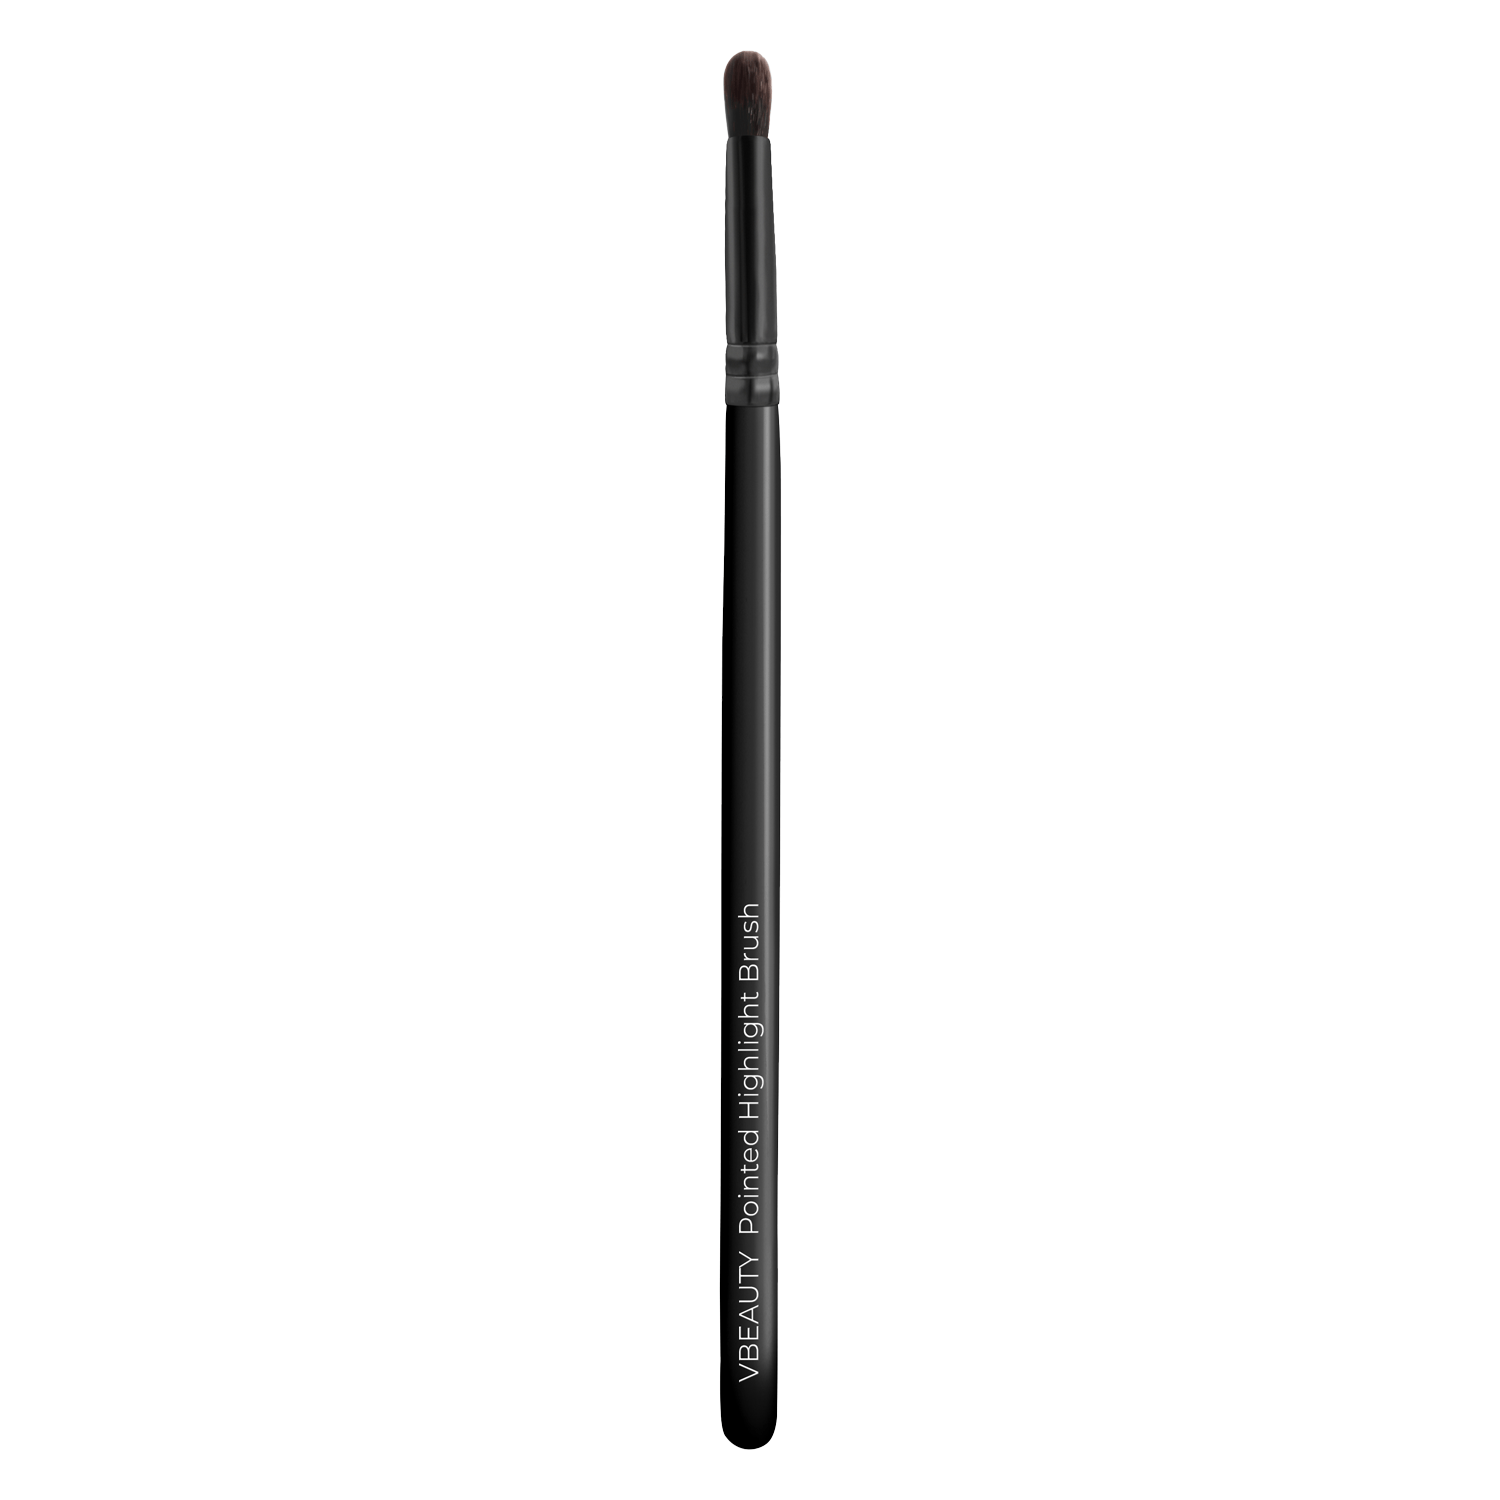 Produktbild von VBEAUTY Make Up - Pointed Highlight Brush